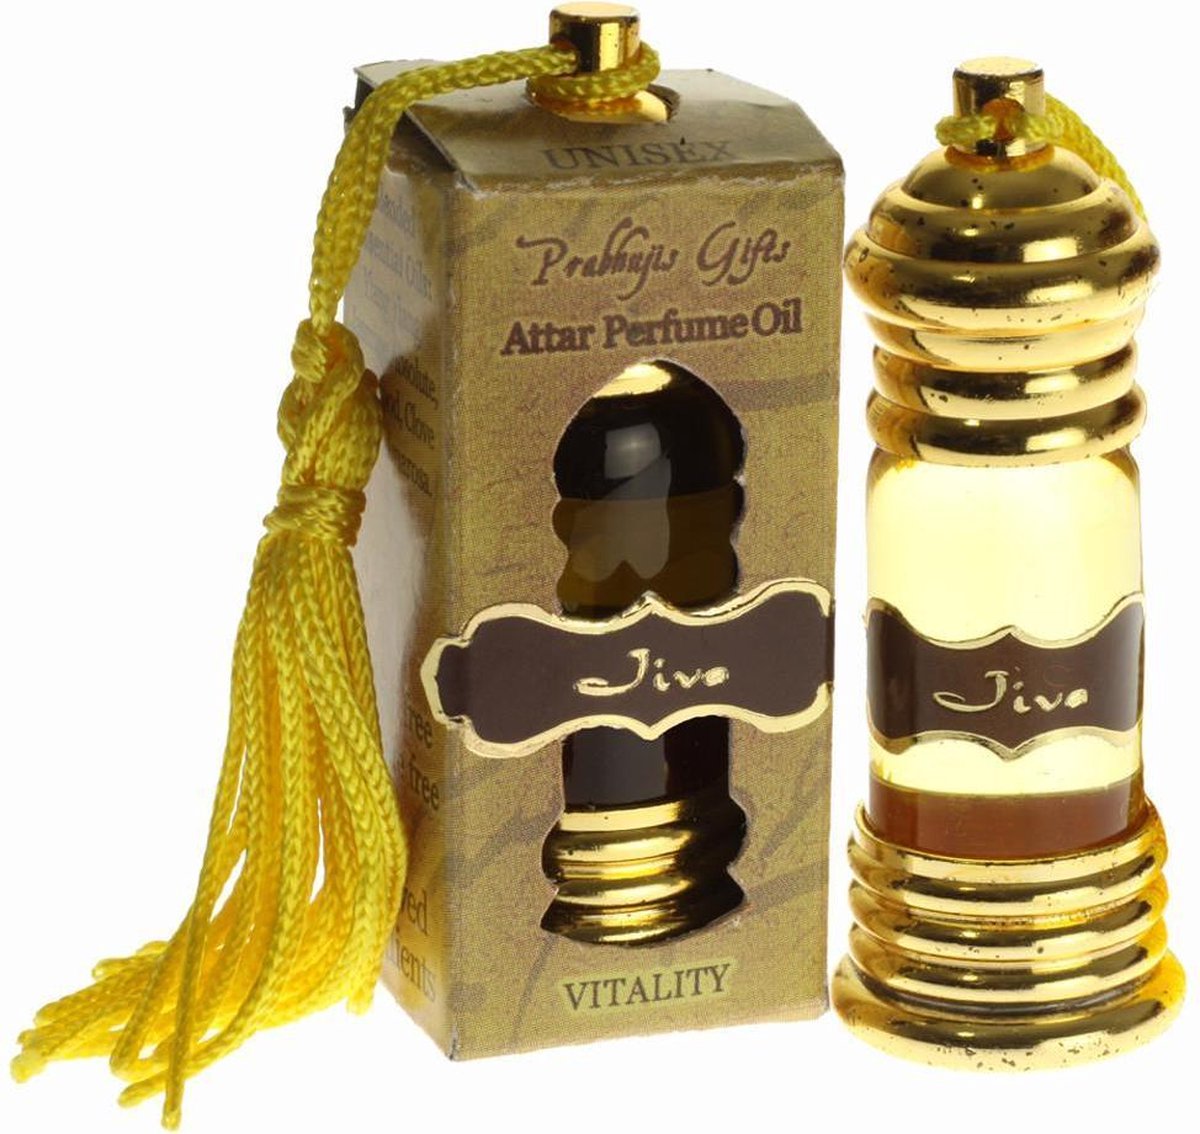 Attar parfum olie 'Jiva' (vitaliteit), Prabhuji's Gifts, 6 ml